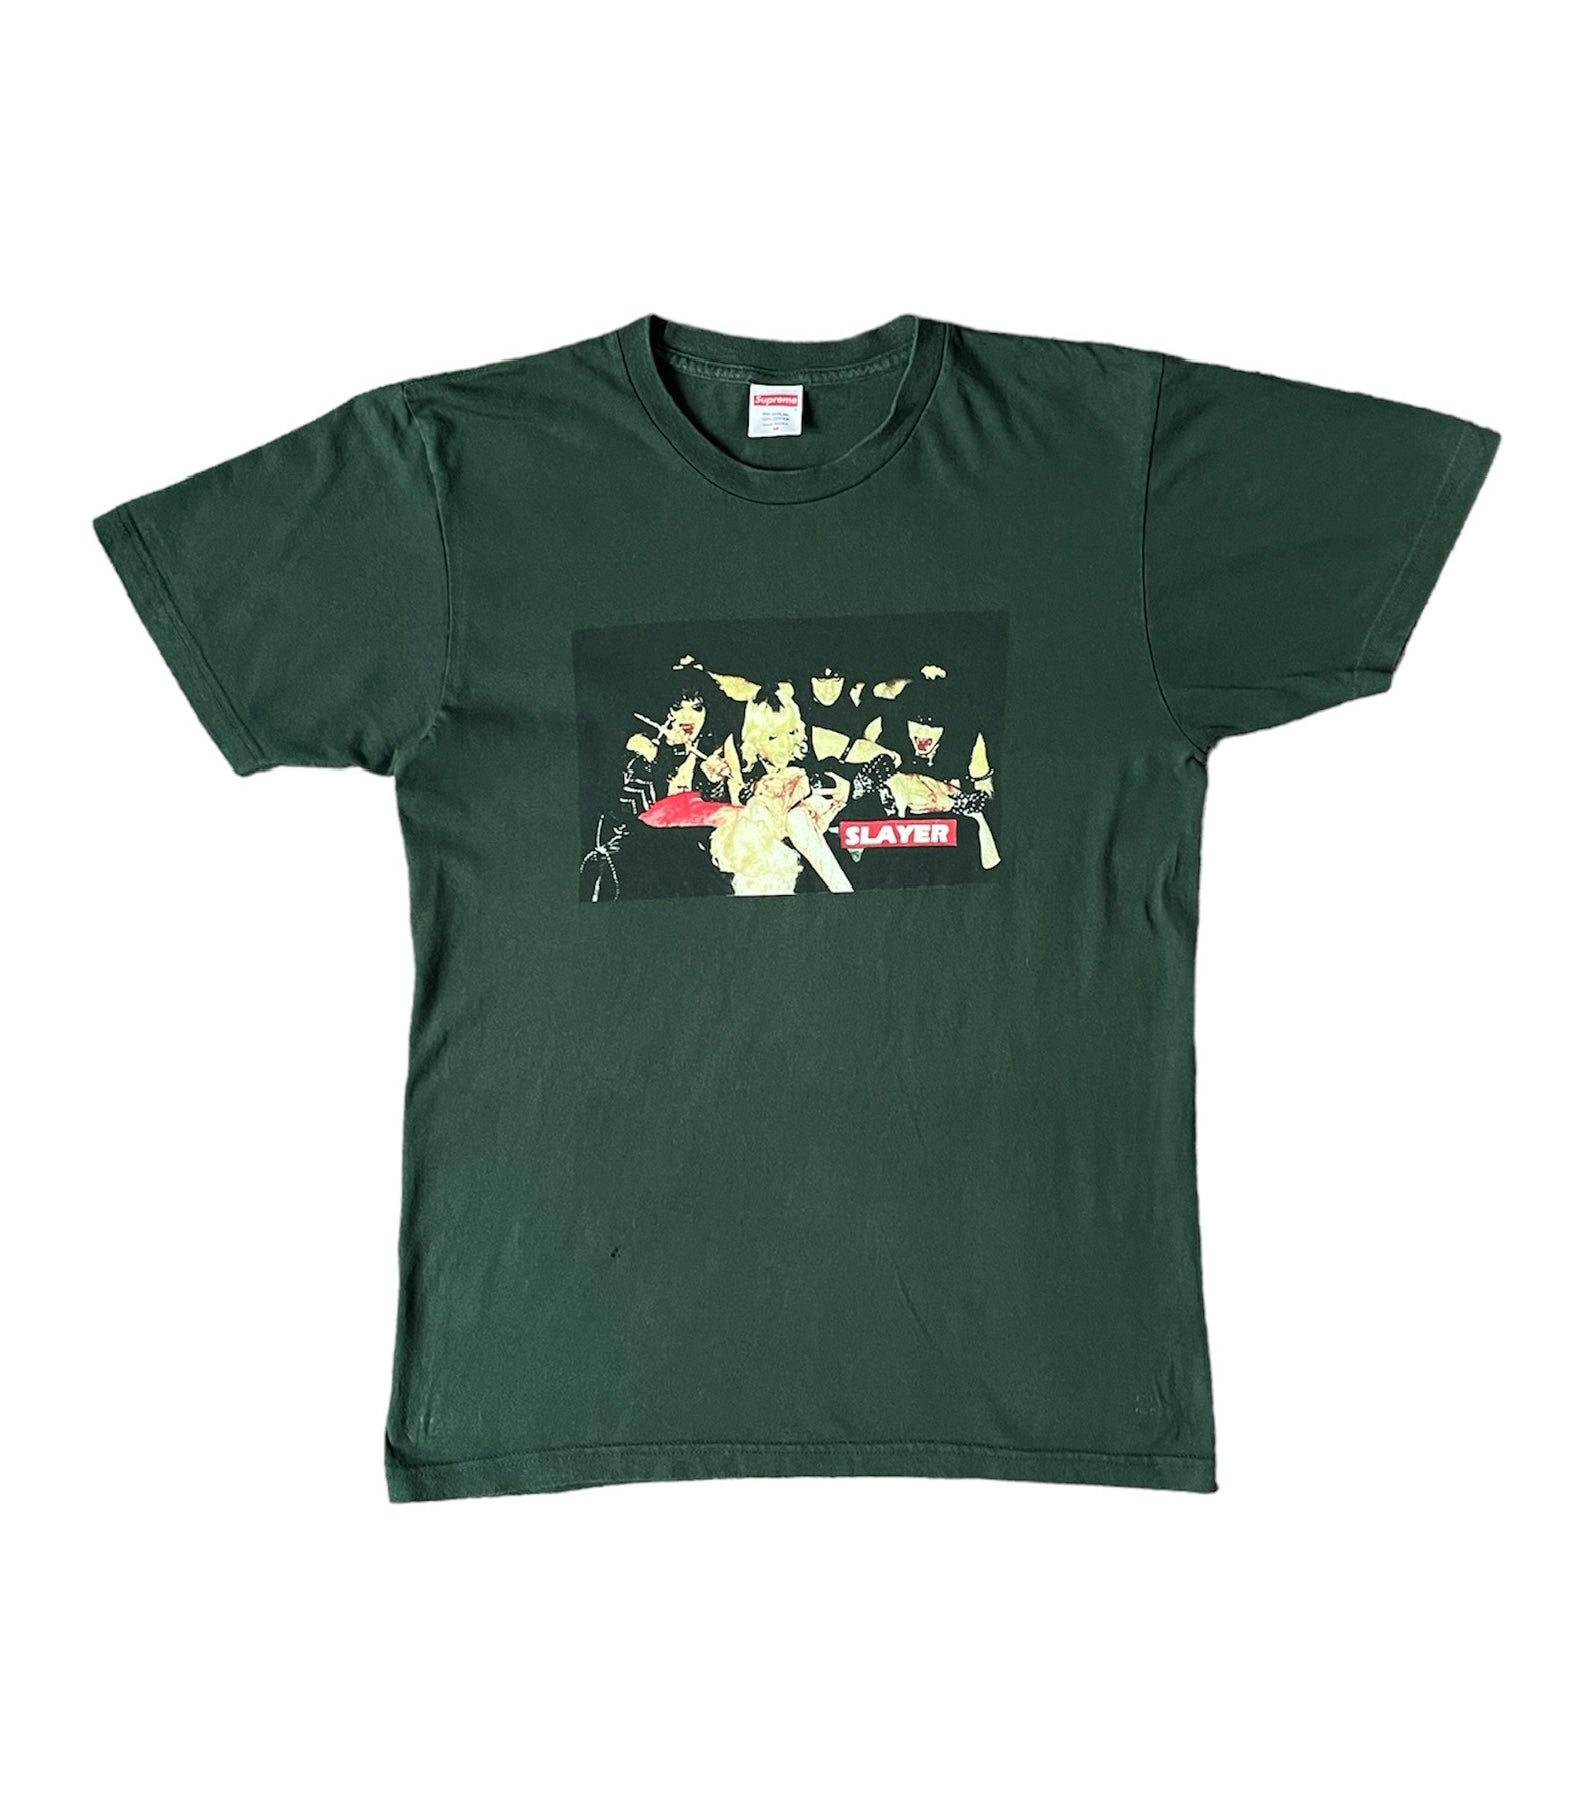 x Slayer T Shirt Forest Green - Medium Goose Vintage